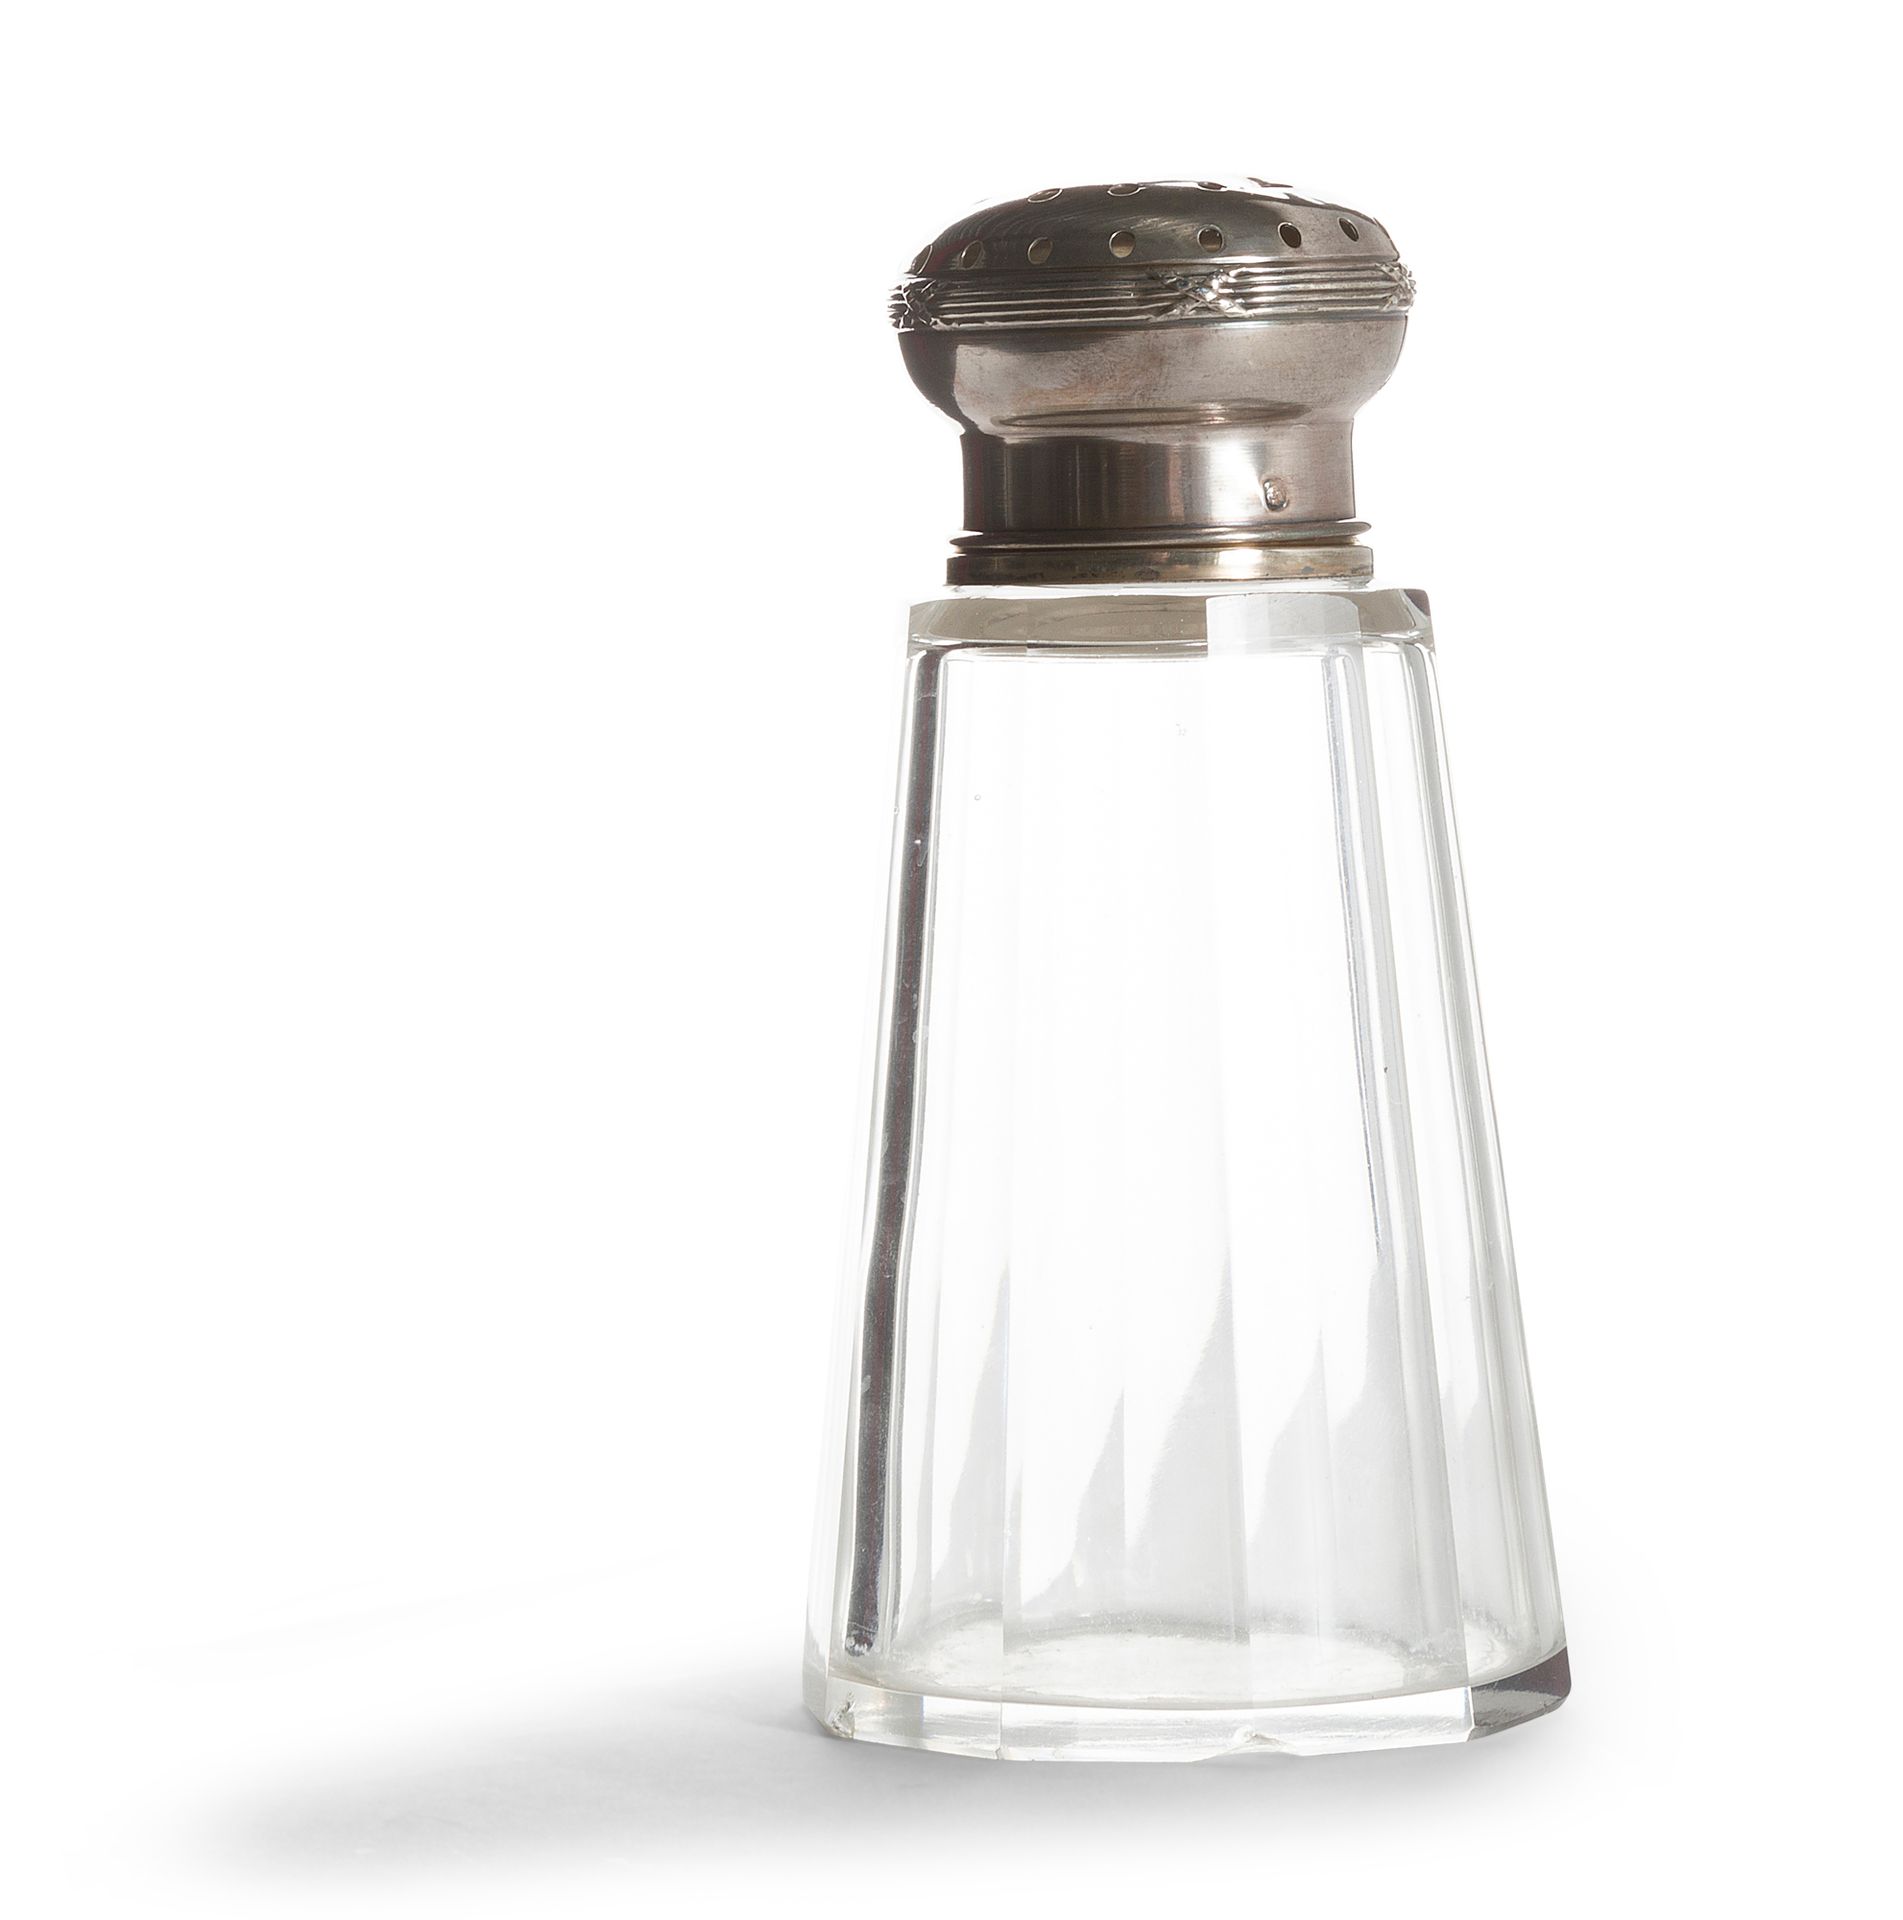 Null 切削的水晶瓶，里面装的是saupoudroir。银色瓶塞（米诺尔第一标题）。(小幅震荡）。

H.21和13厘米

颈部和银色塞子的连接

可称重部件&hellip;